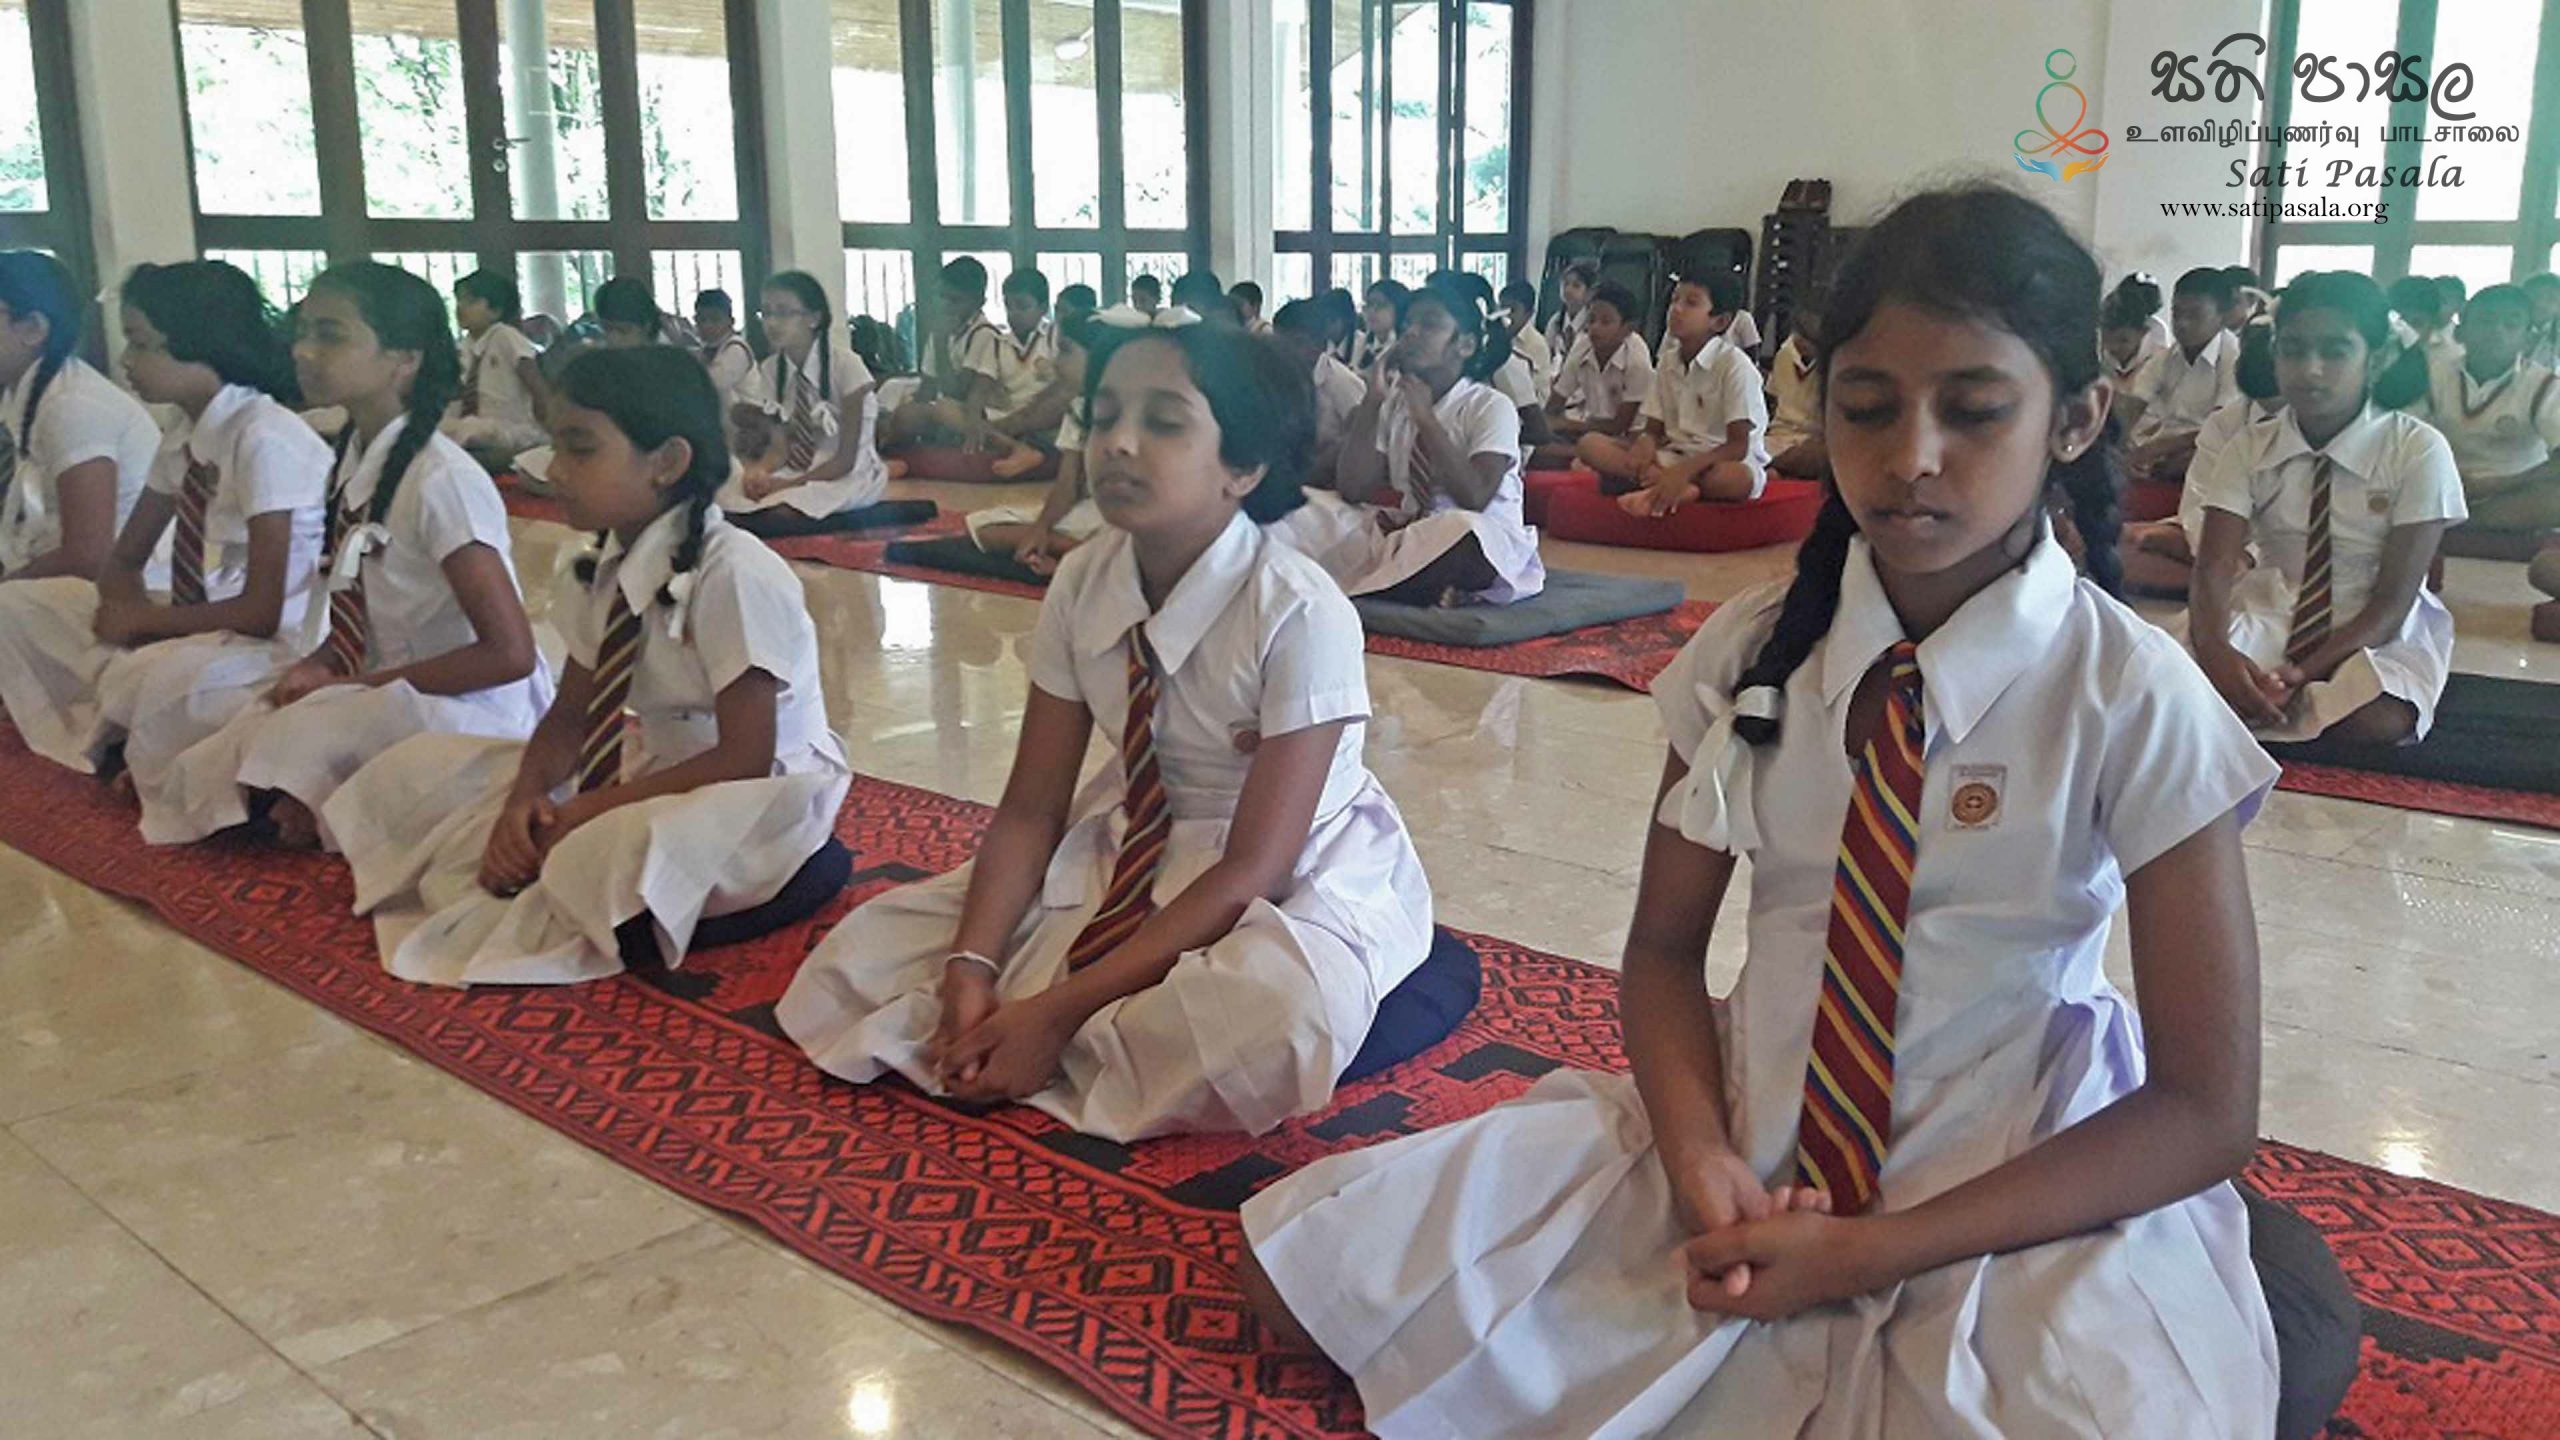 Sati Pasala Mindfulness Programme for Dheerananda College, Pilimathalawa